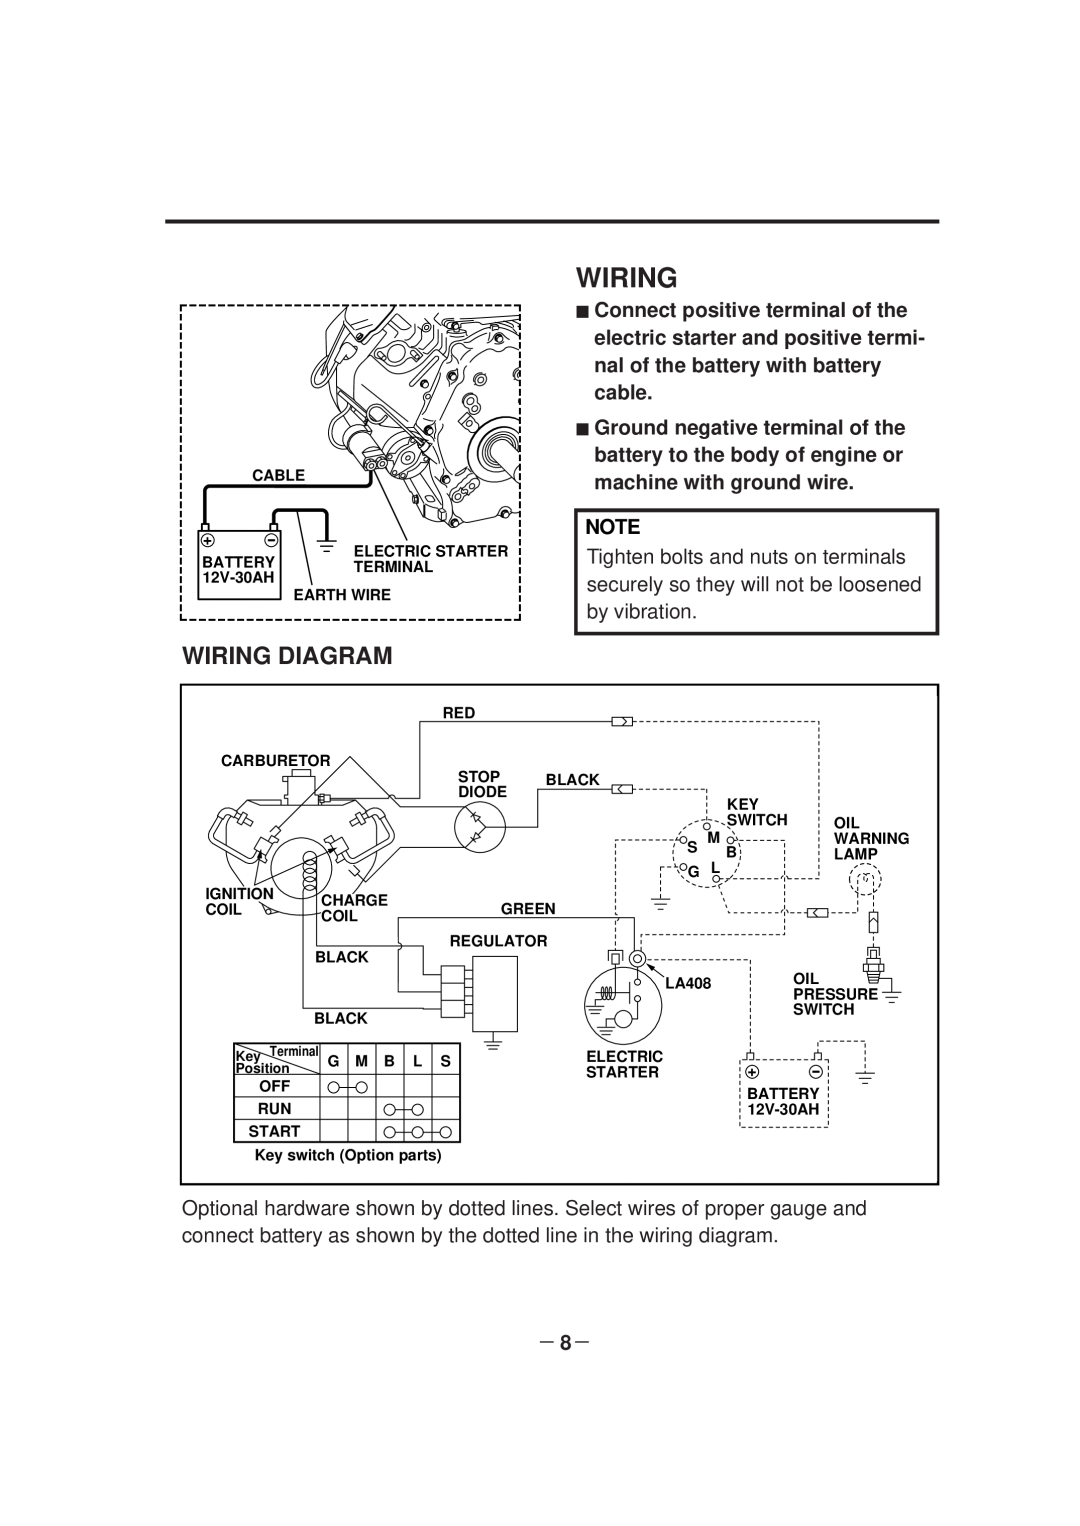 Subaru Robin Power Products EH64D, EH65D, EH63D manual Wiring Diagram, － 8－ 